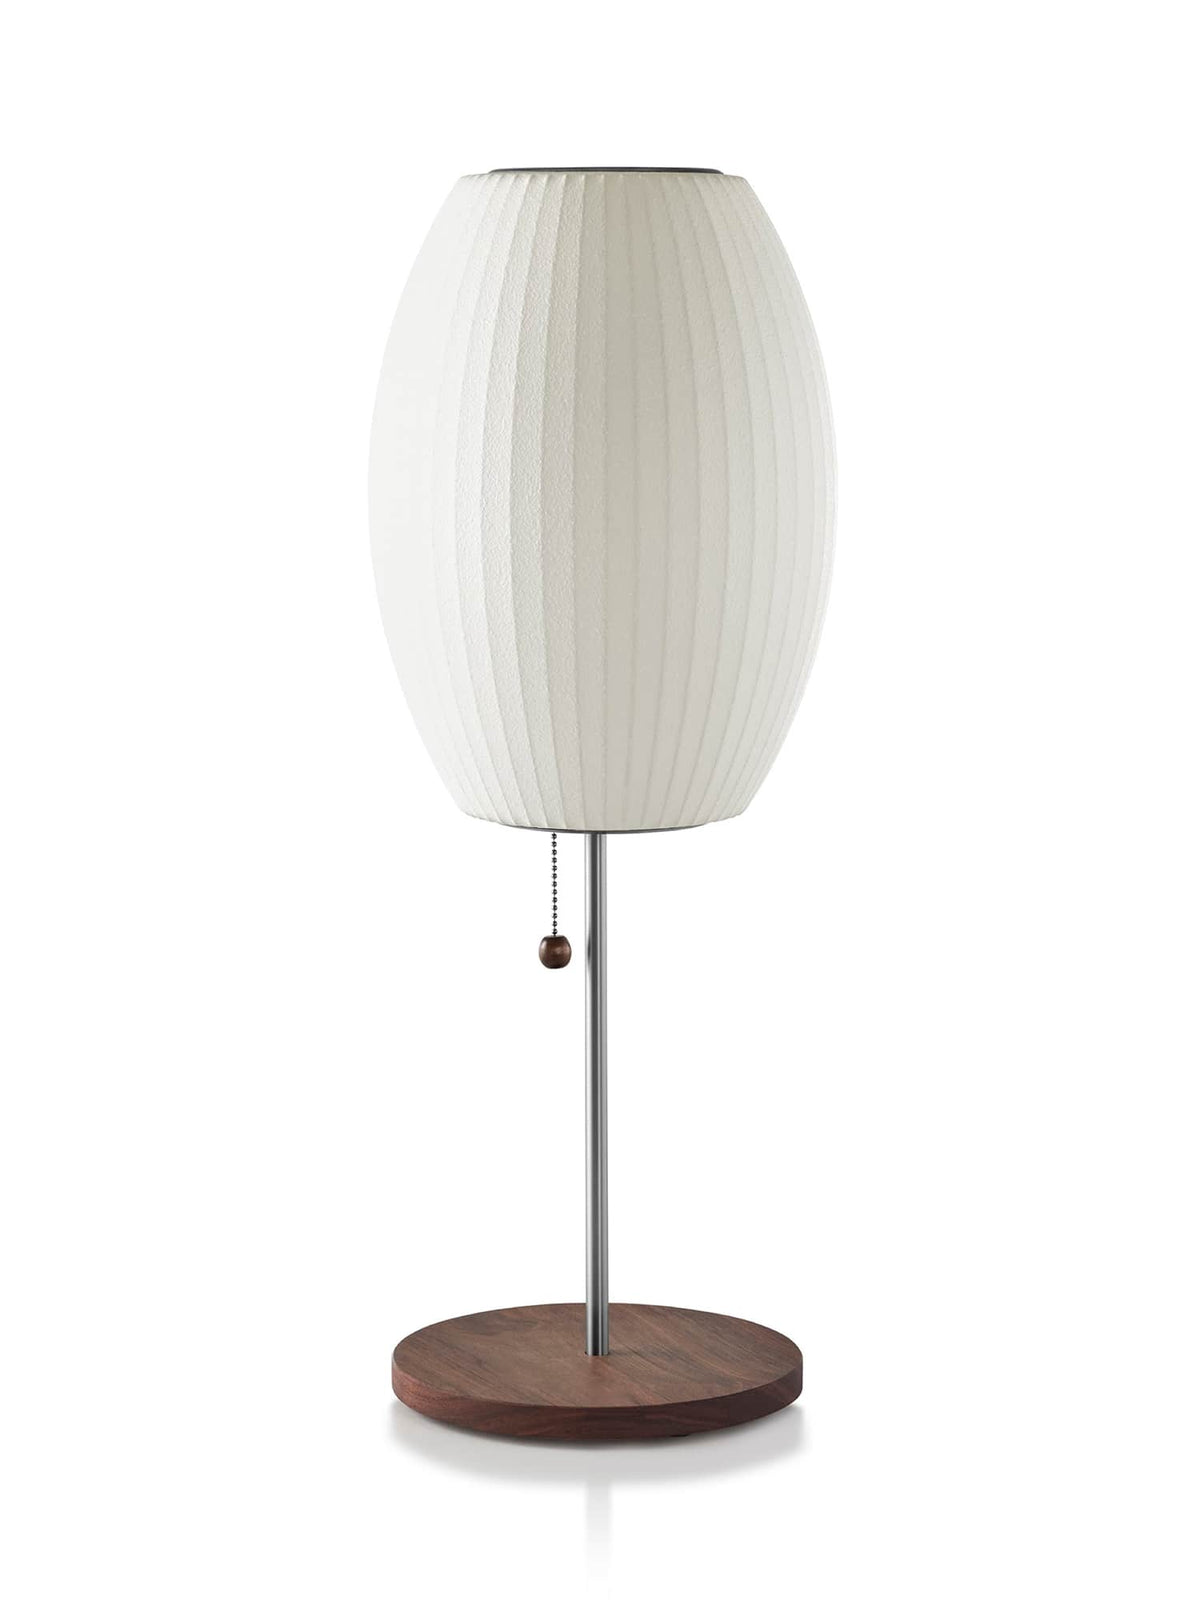 Nelson Cigar Lotus Table Lamp